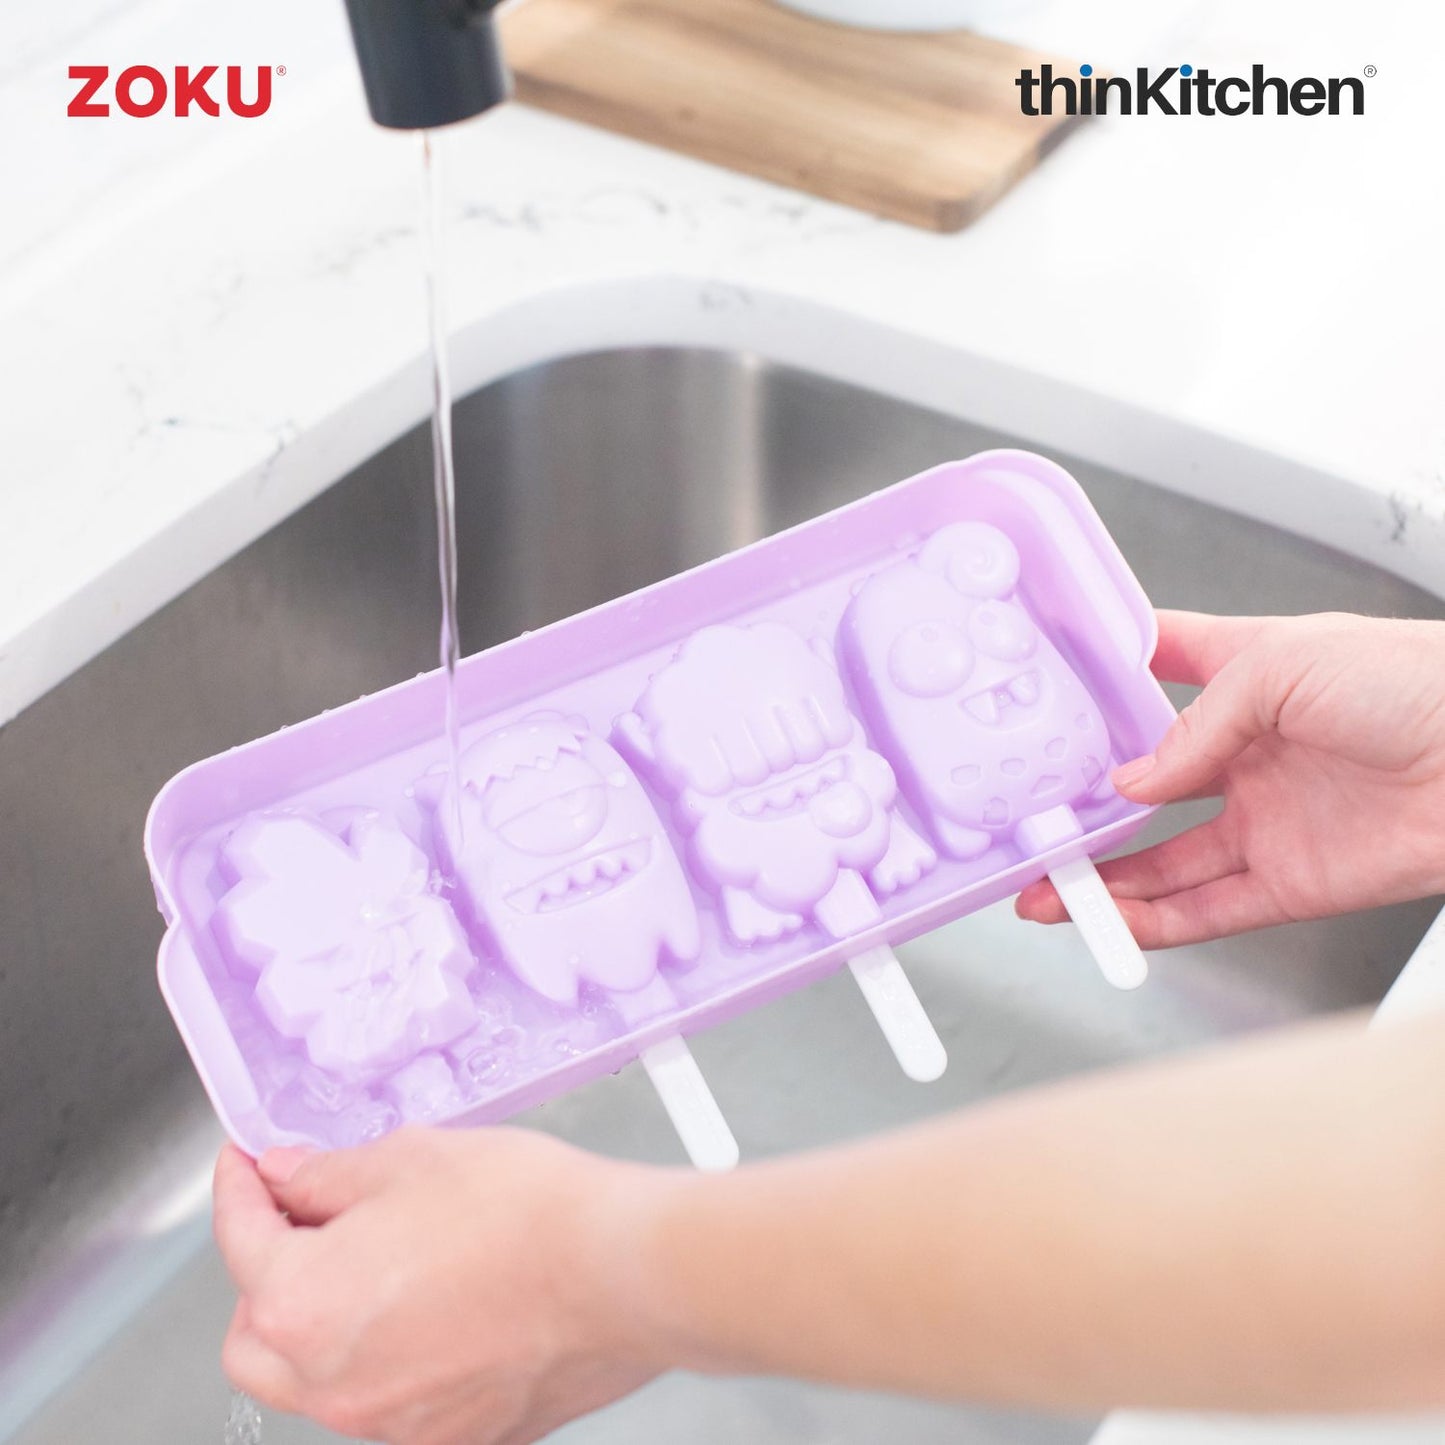 Zoku Monster Ice Pop Mold